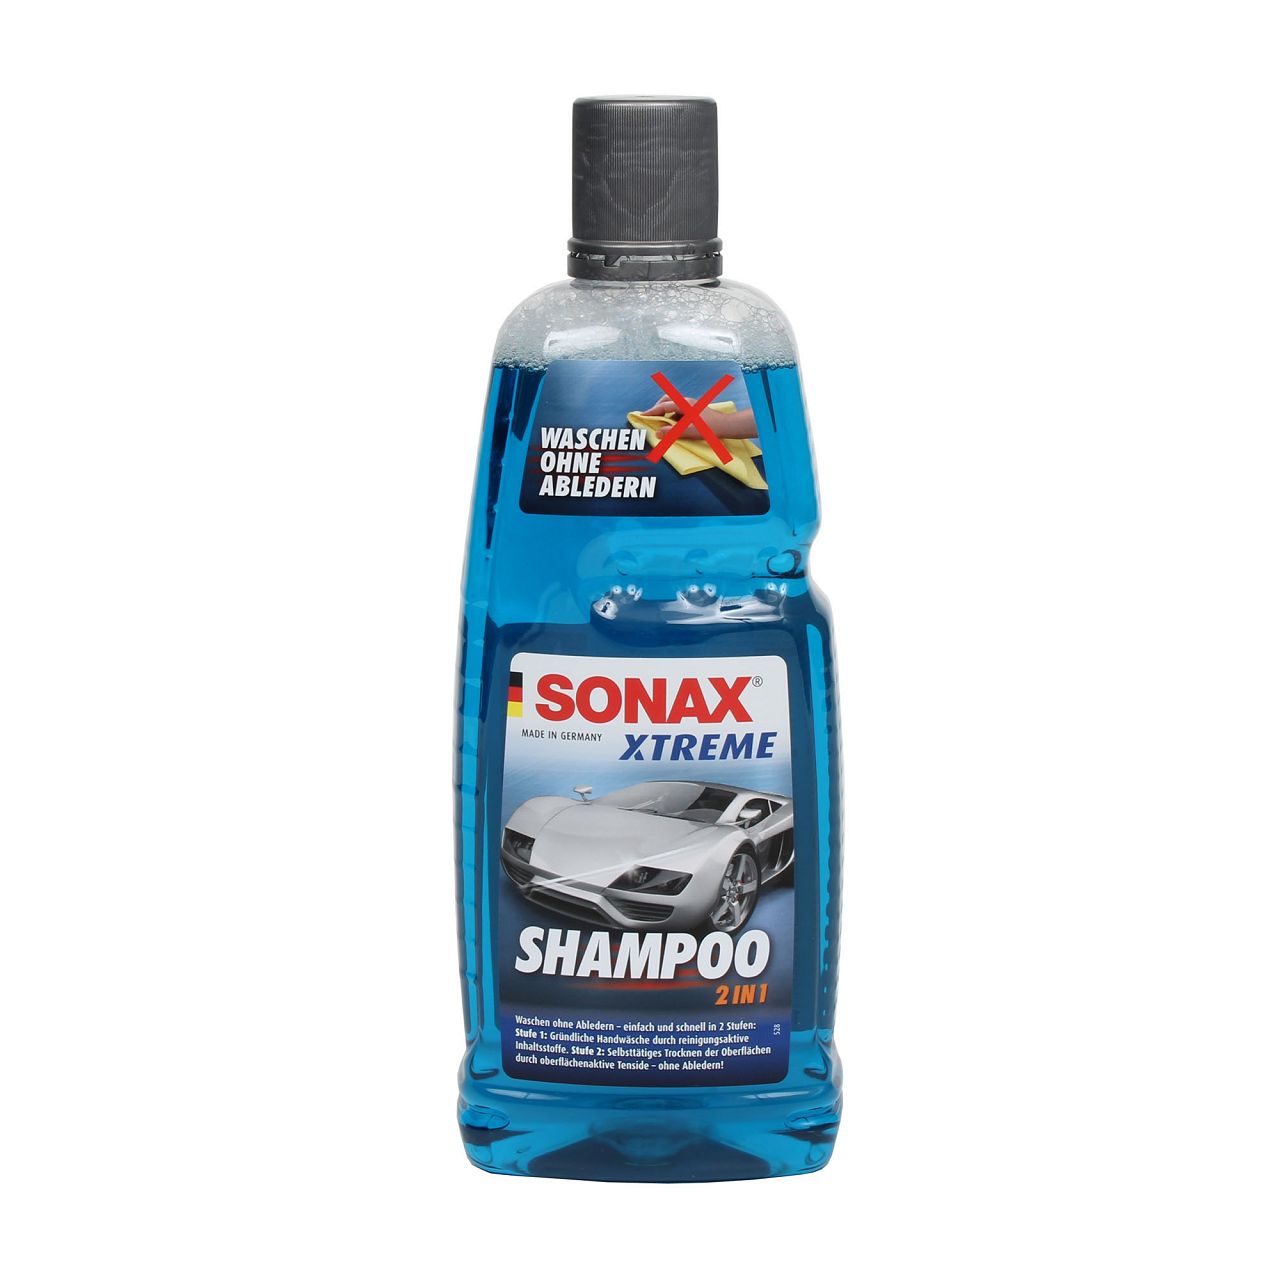 SONAX 215300 Xtreme Shampoo 2 in 1 ohne Abledern Autoshampoo 1L 1 Liter